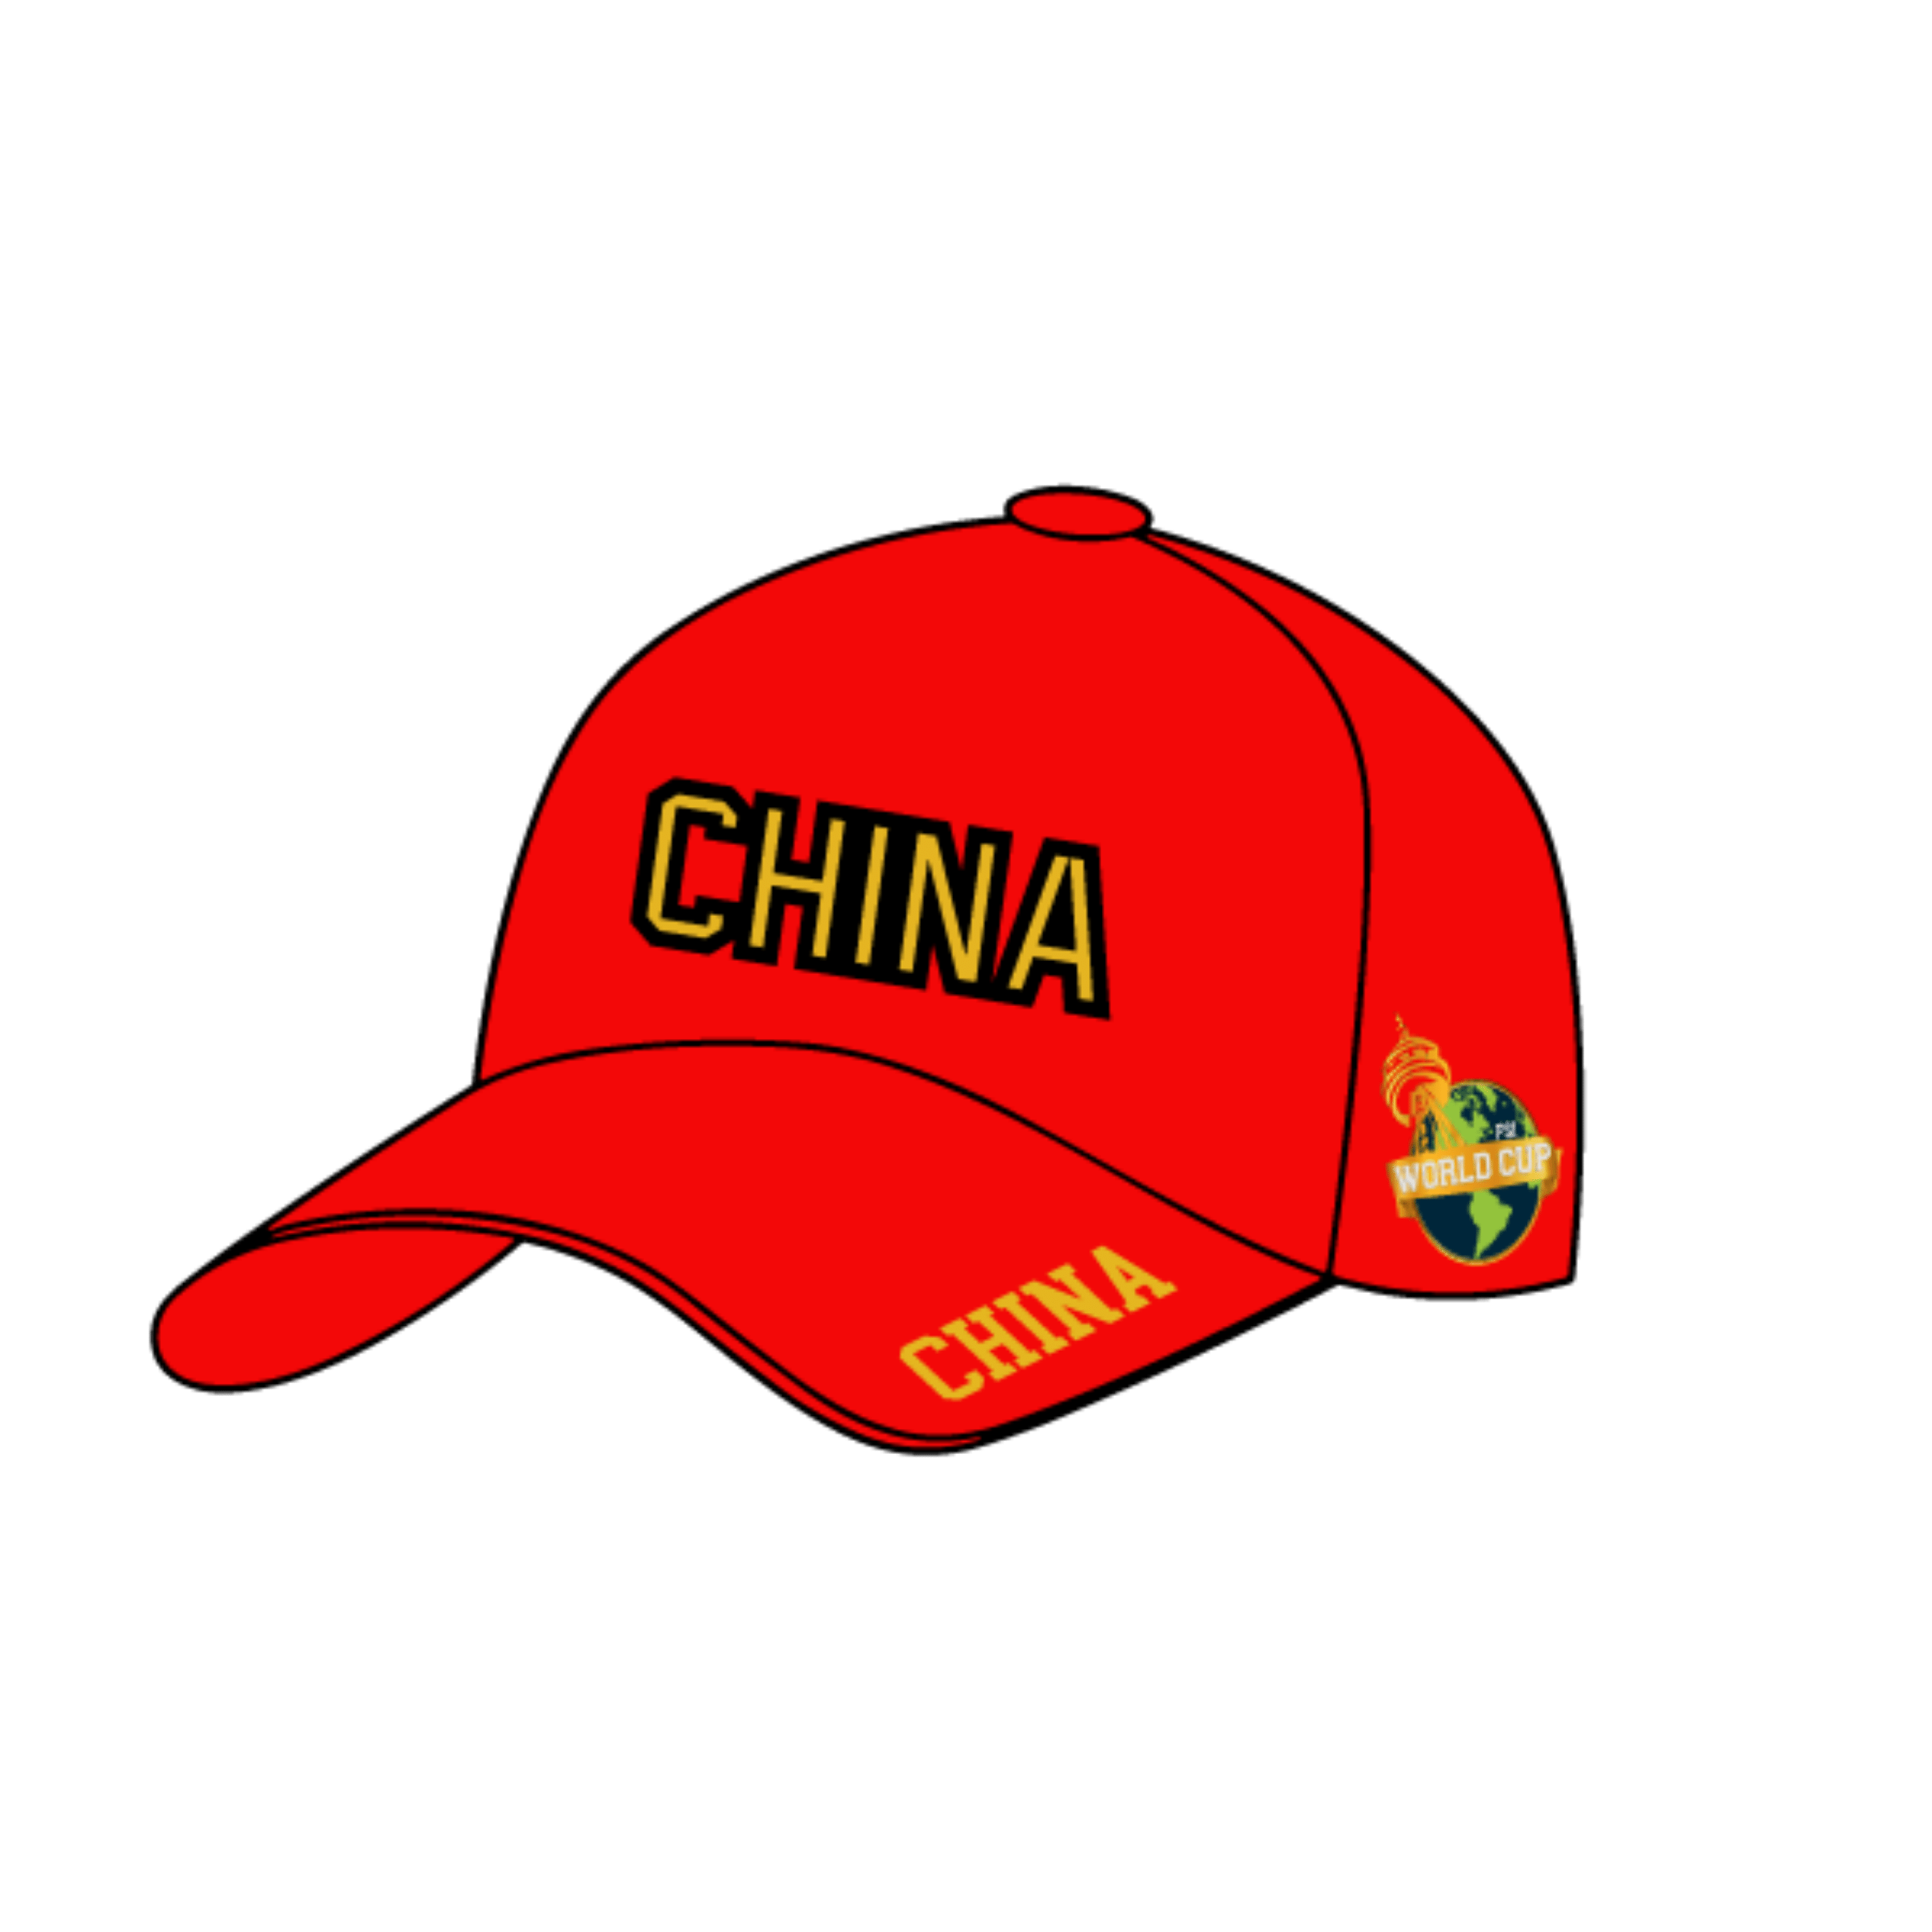 China World Cup Team Bundle